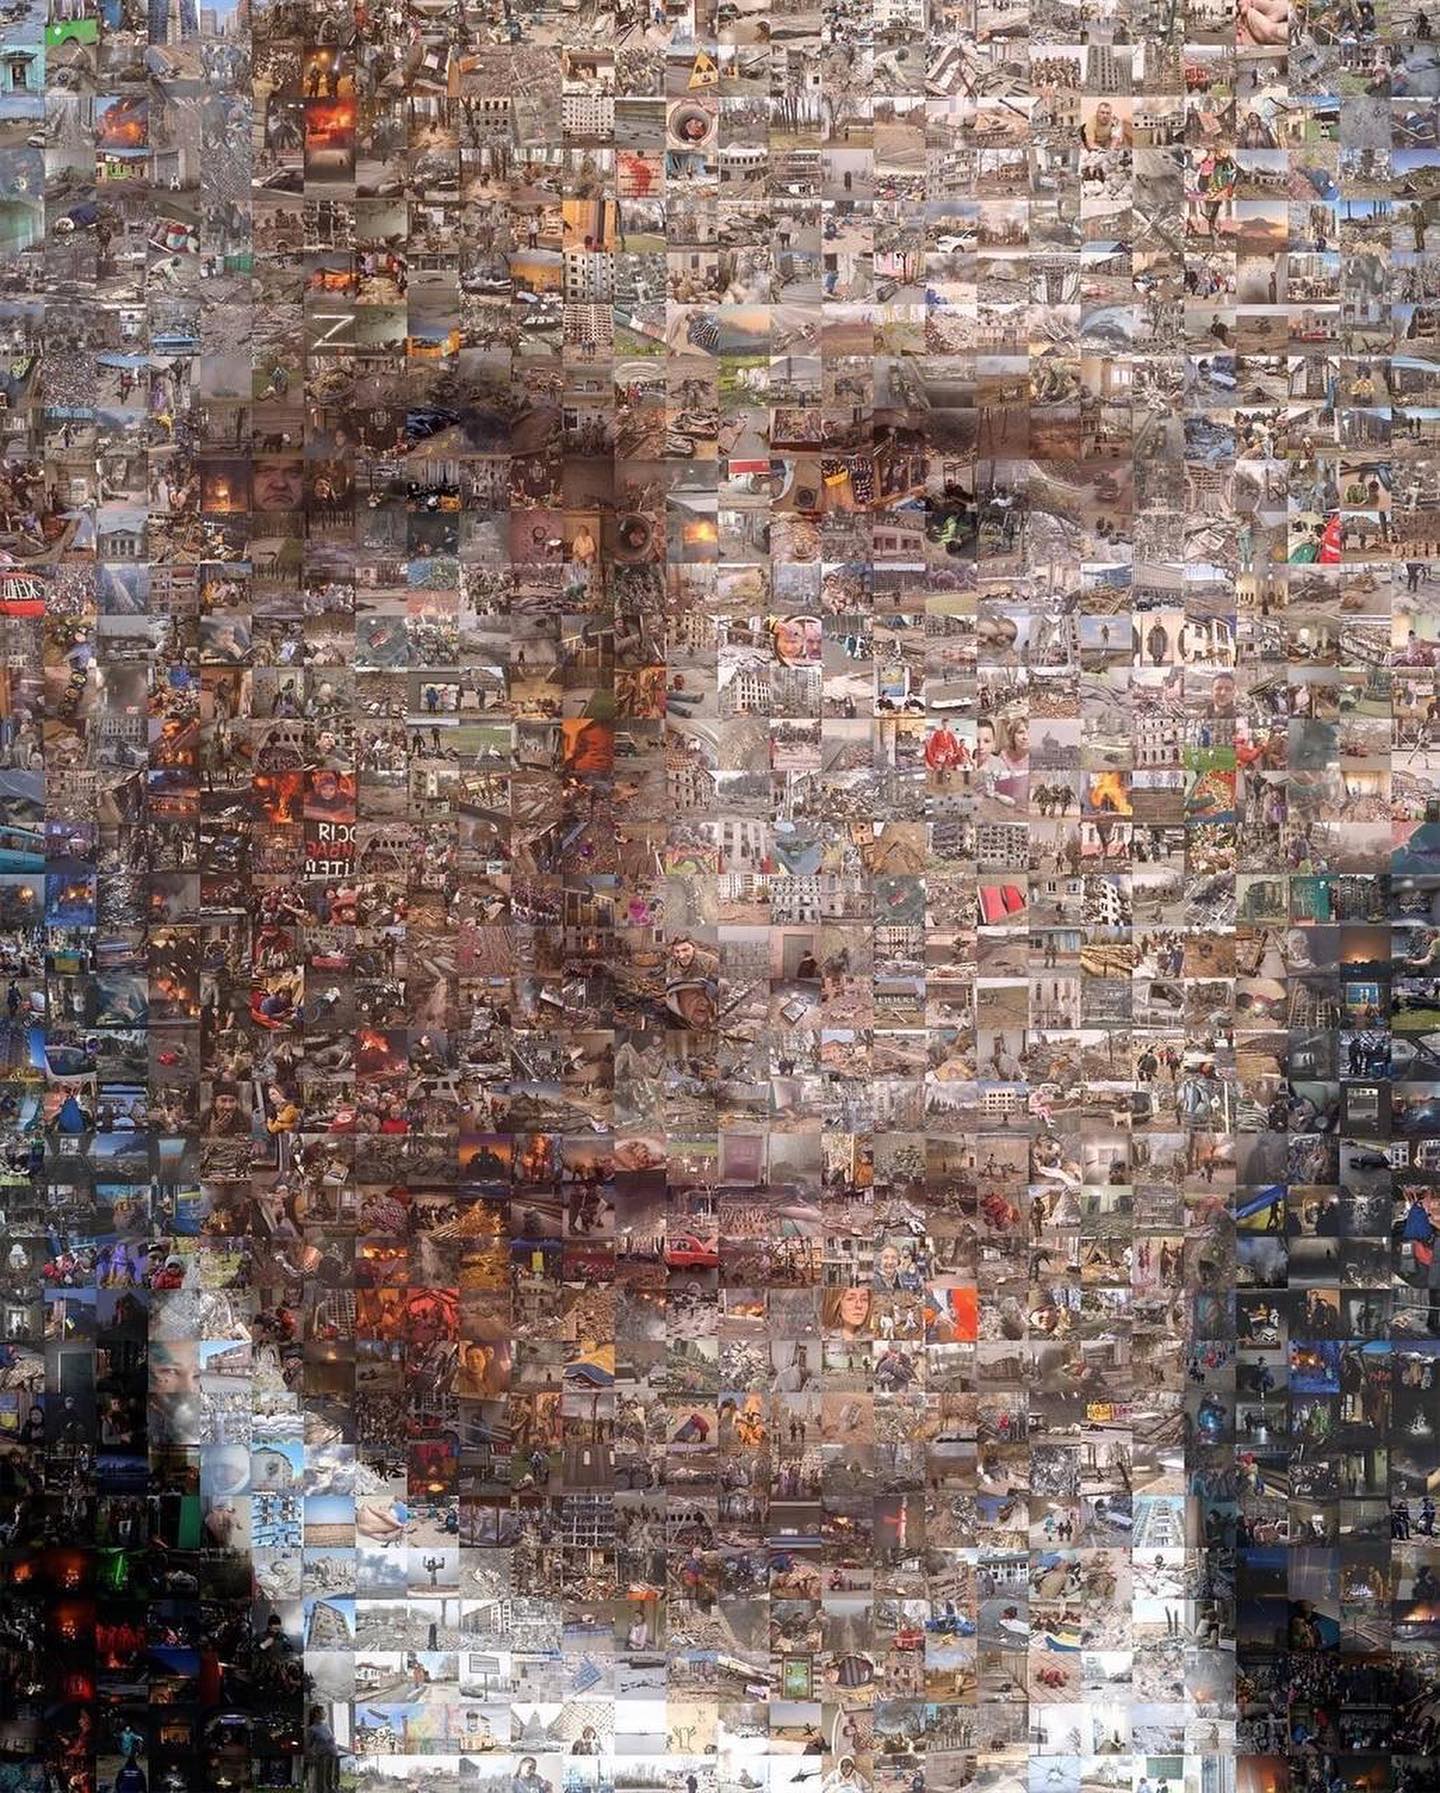 Portrait de Putine ruines